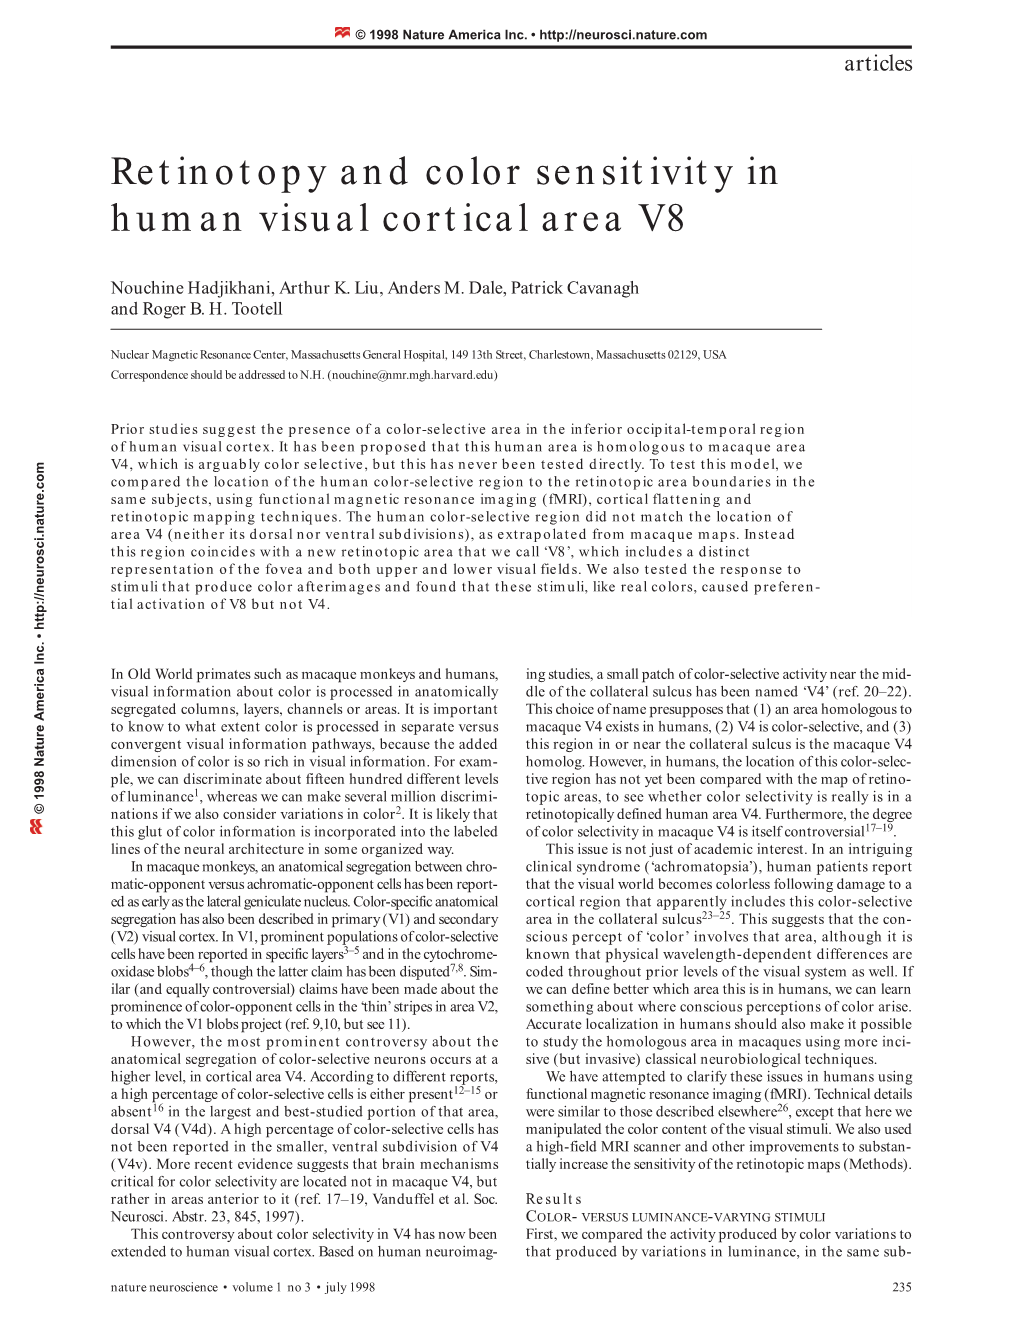 Retinotopy and Color Sensitivity in Human Visual Cortical Area V8